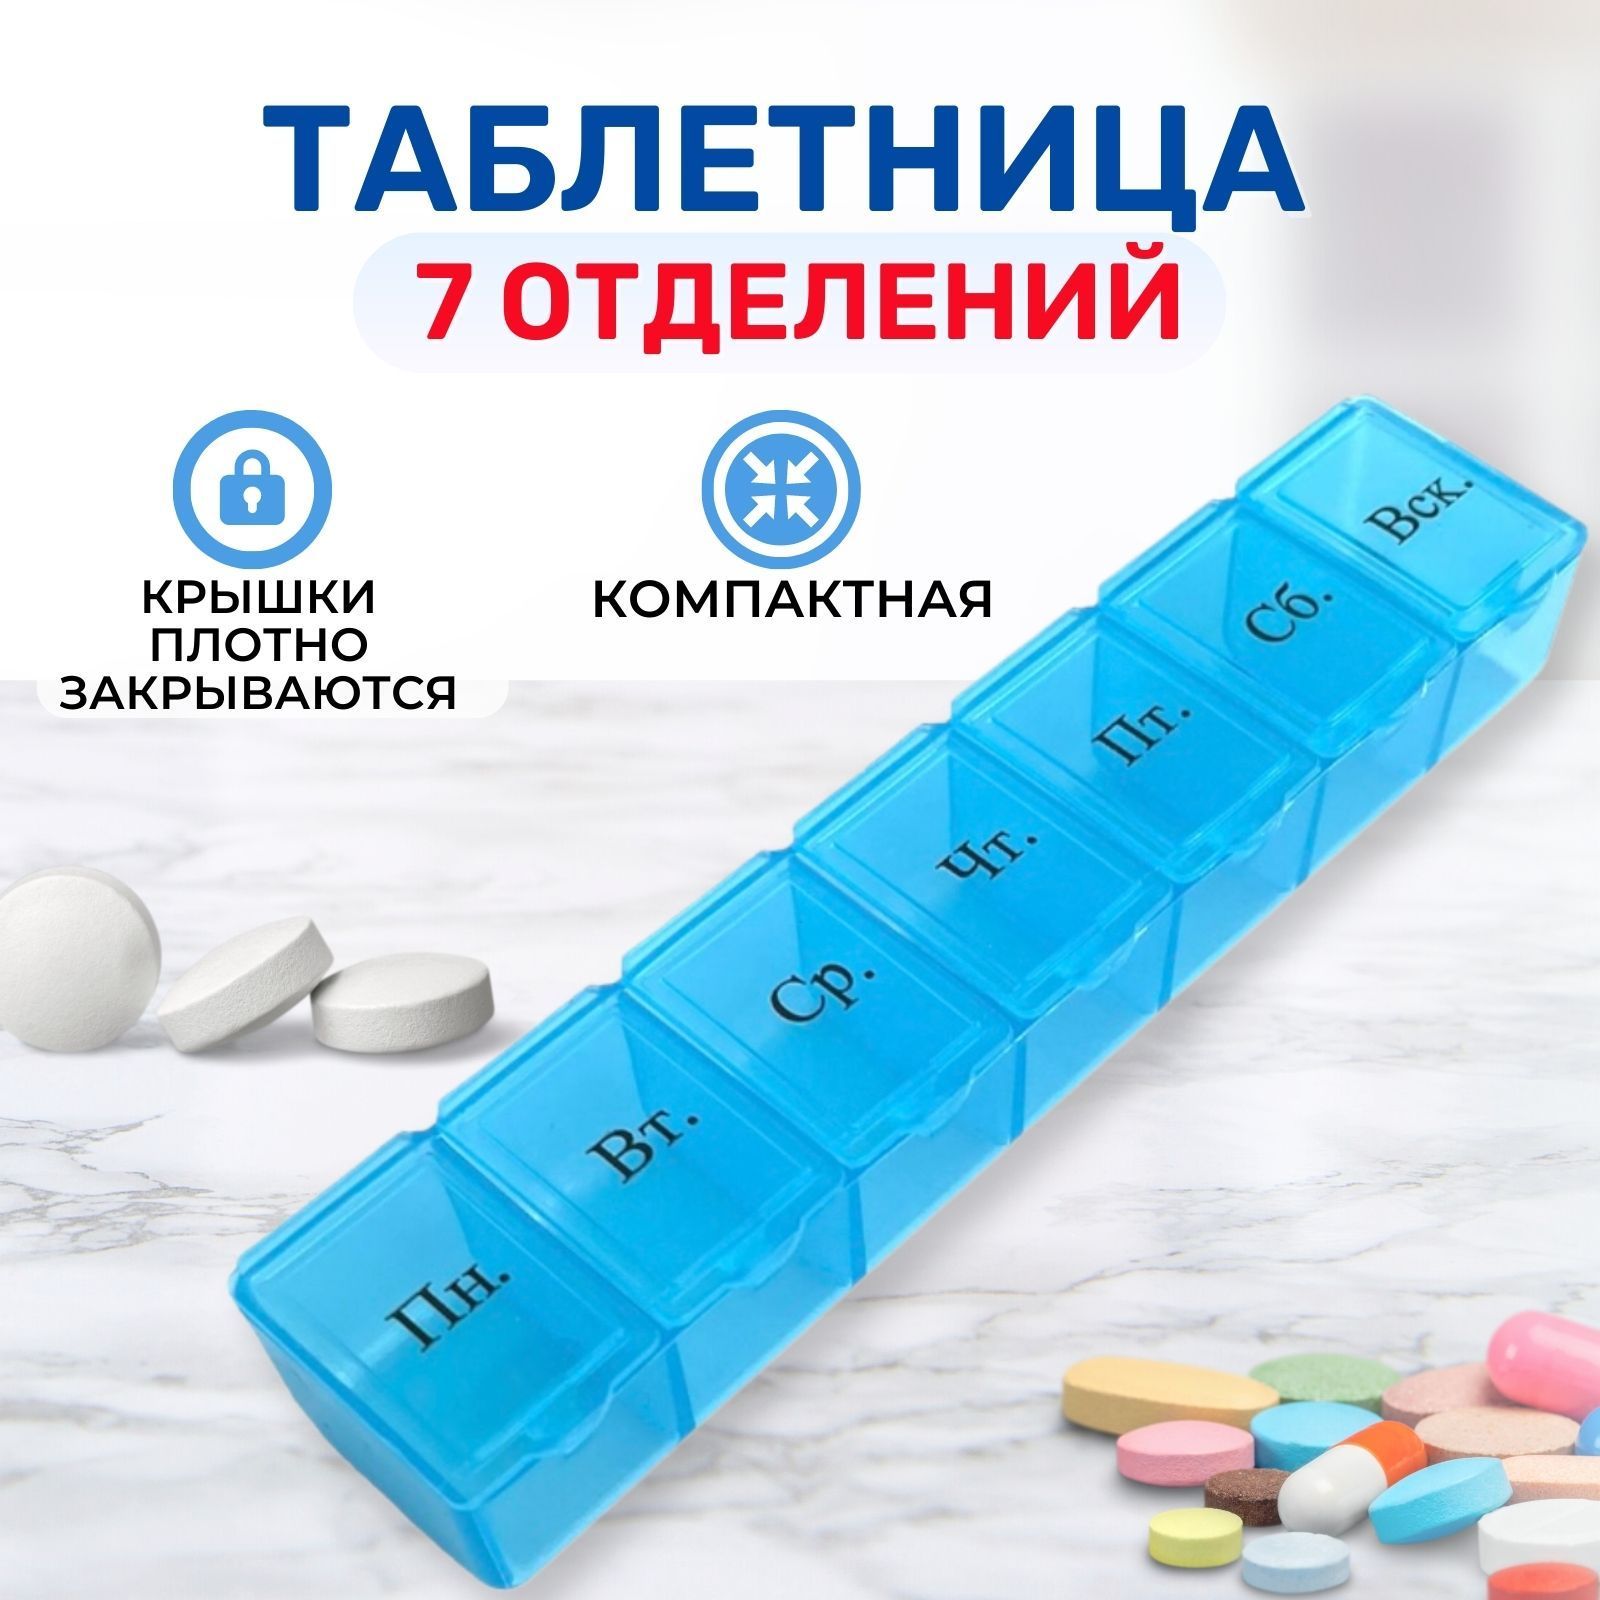 Органайзеры для лекарств | l2luna.ru